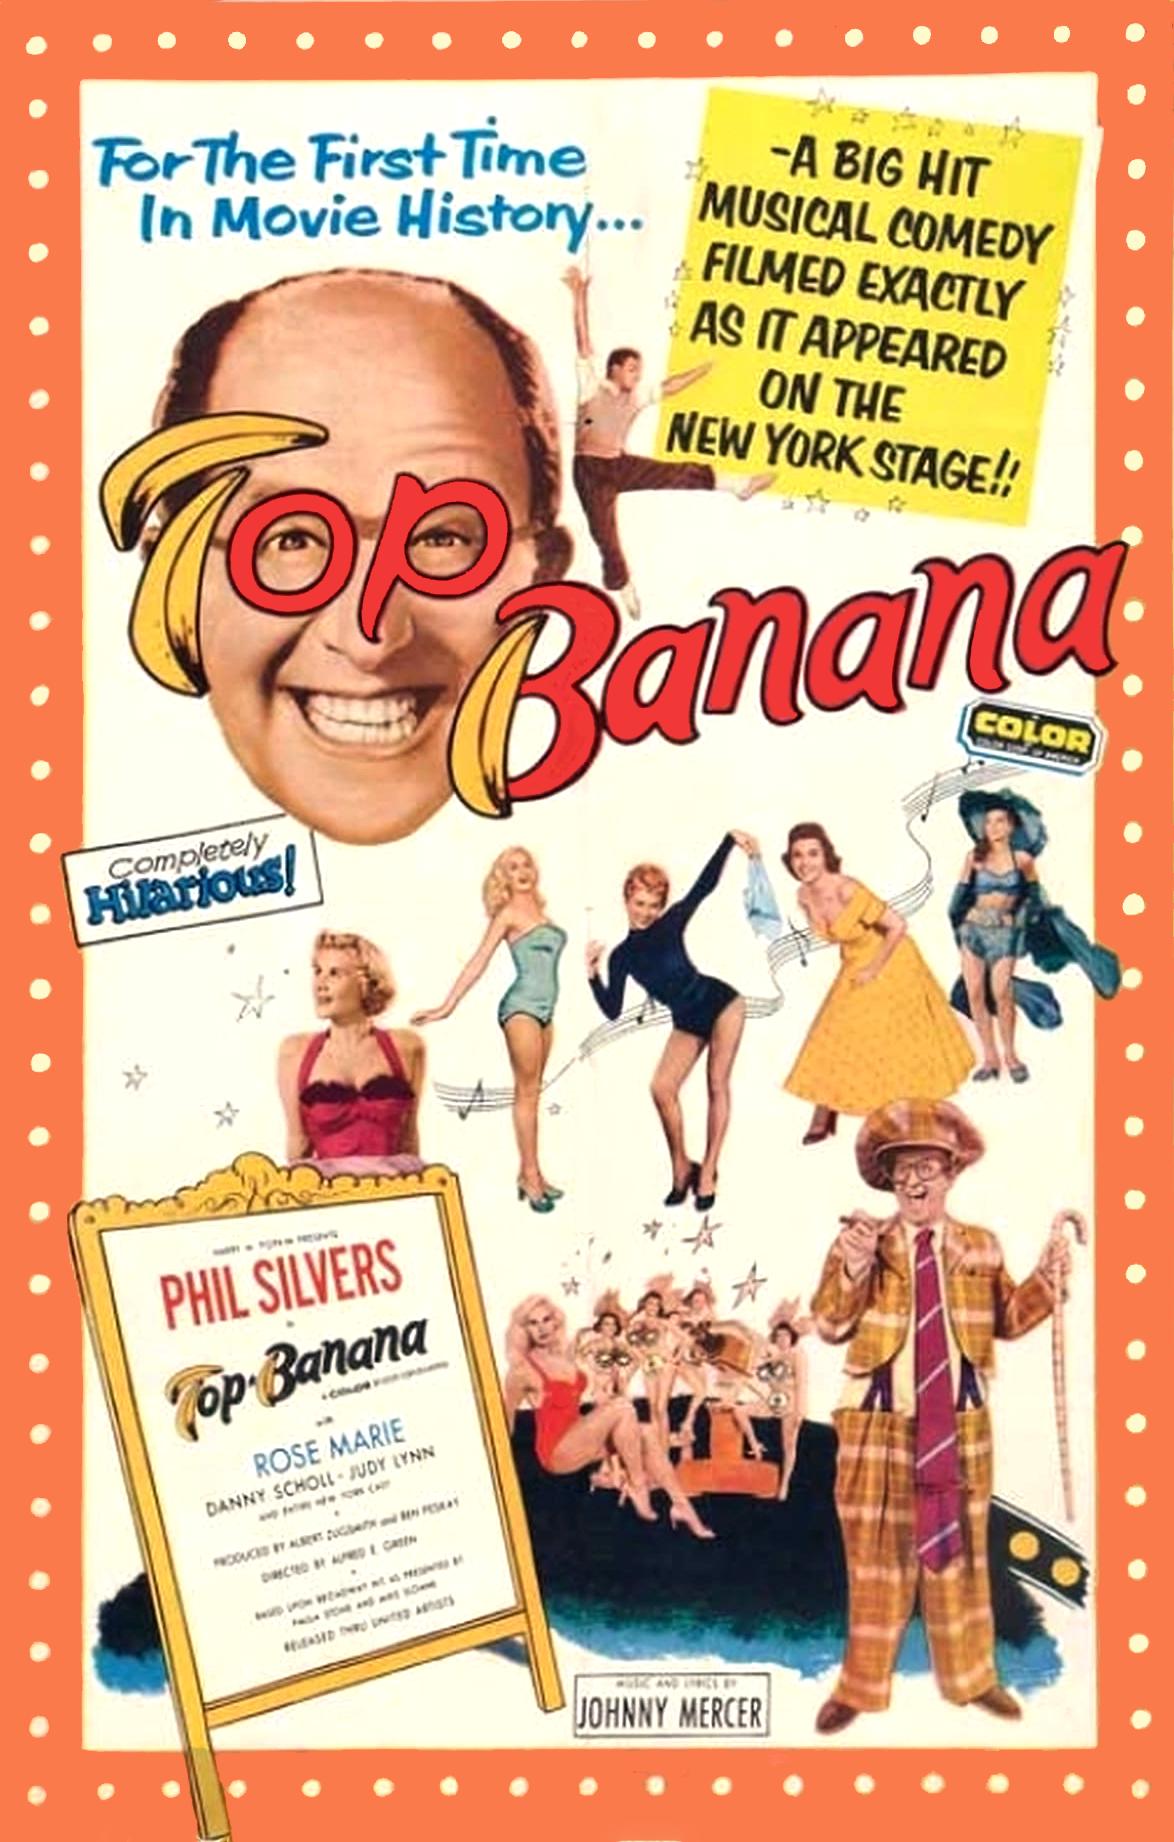 Top Banana (1954) Screenshot 4 